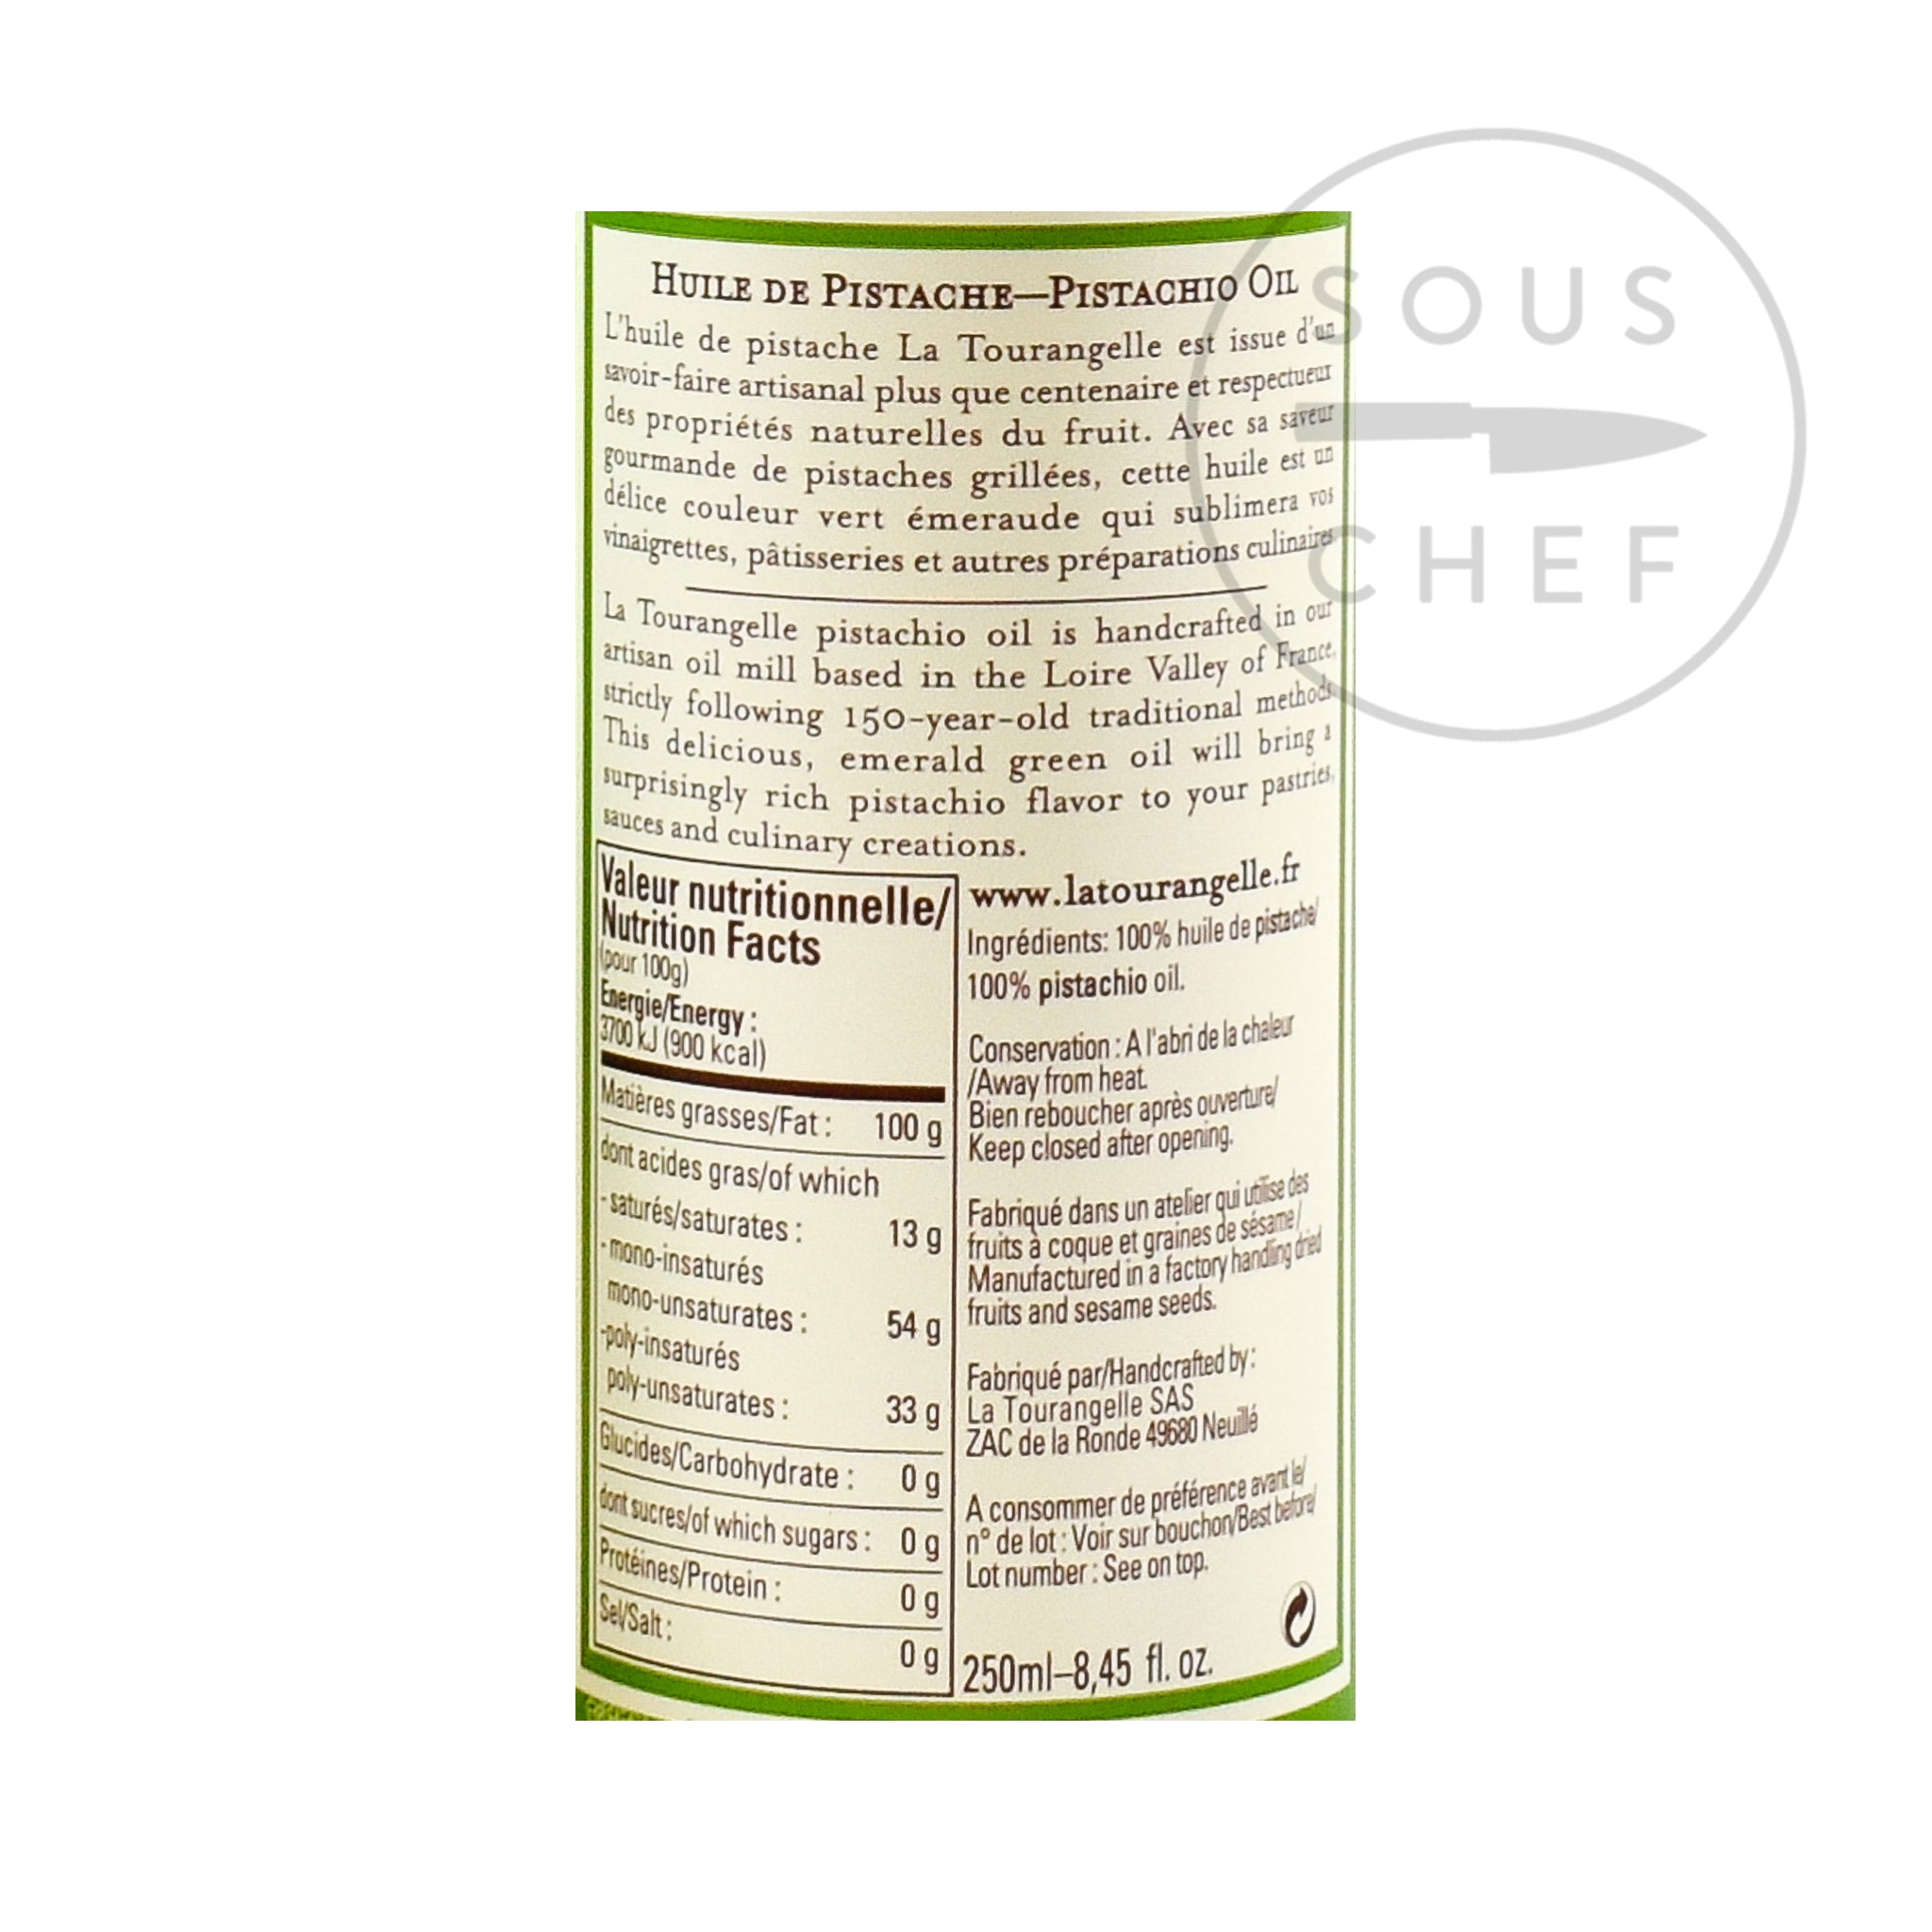 Pistachio Oil 250ml nutritional information ingredients